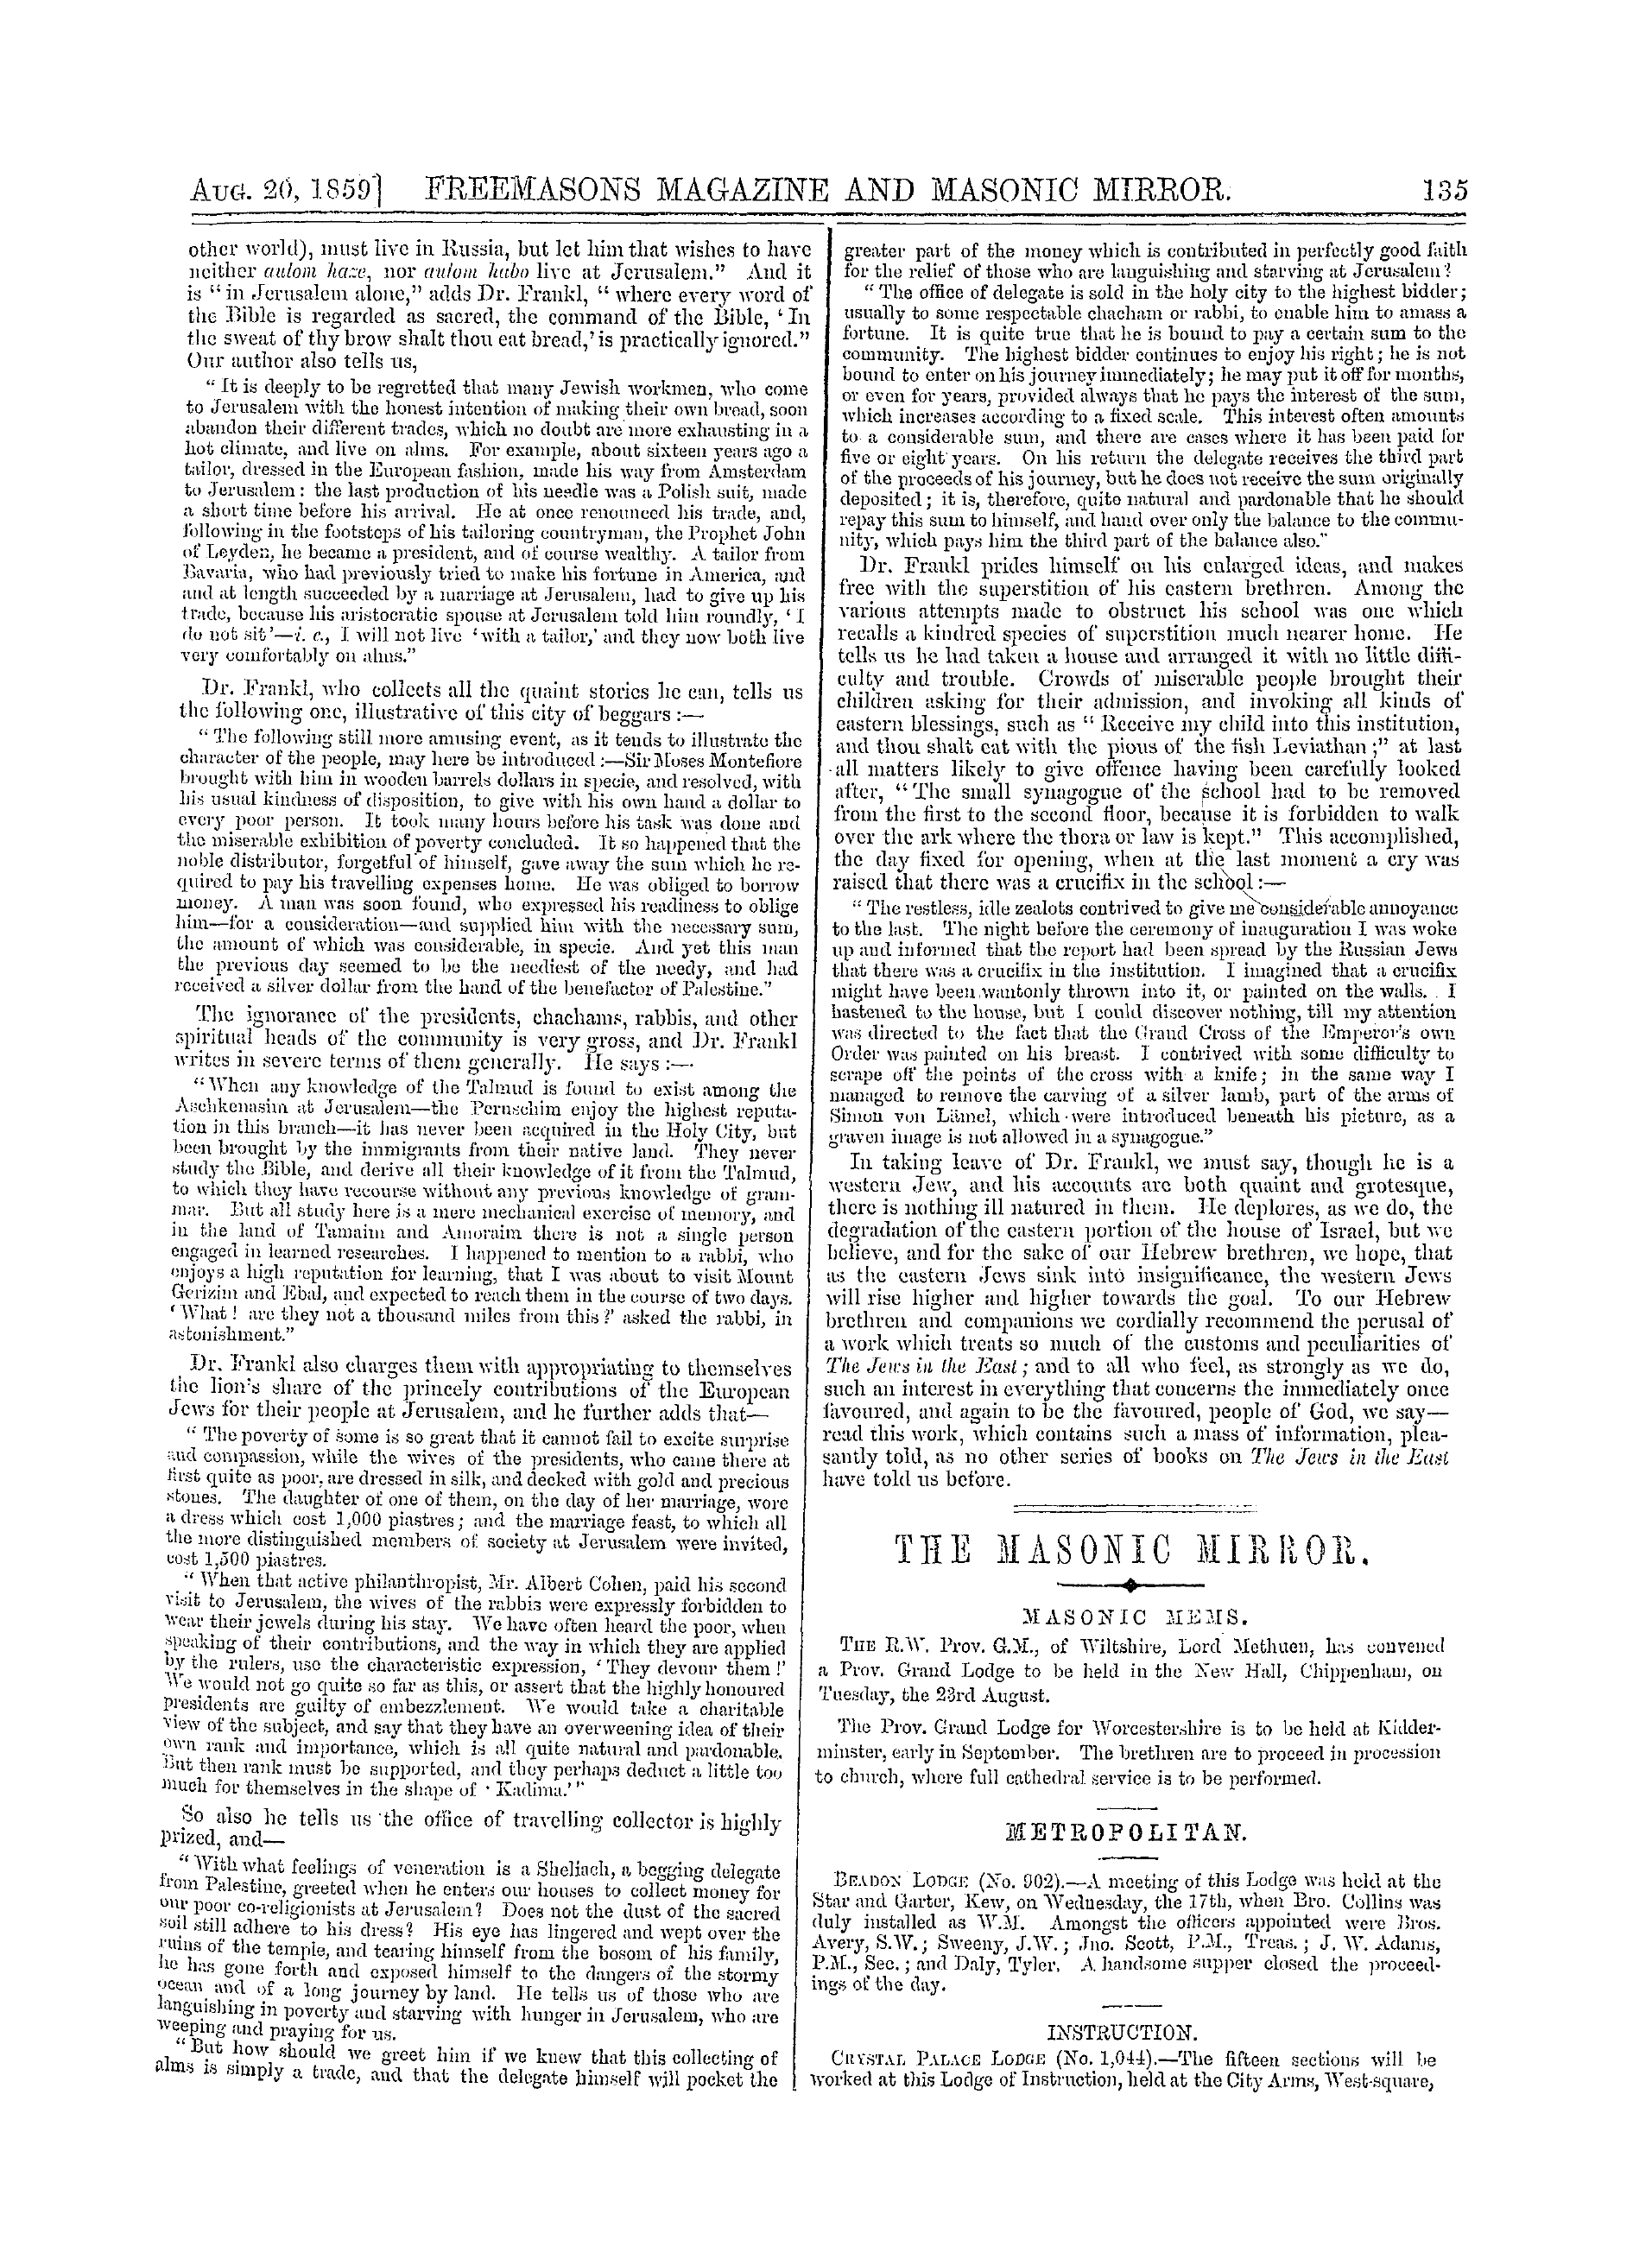 The Freemasons' Monthly Magazine: 1859-08-20 - The Masonic Mirror.